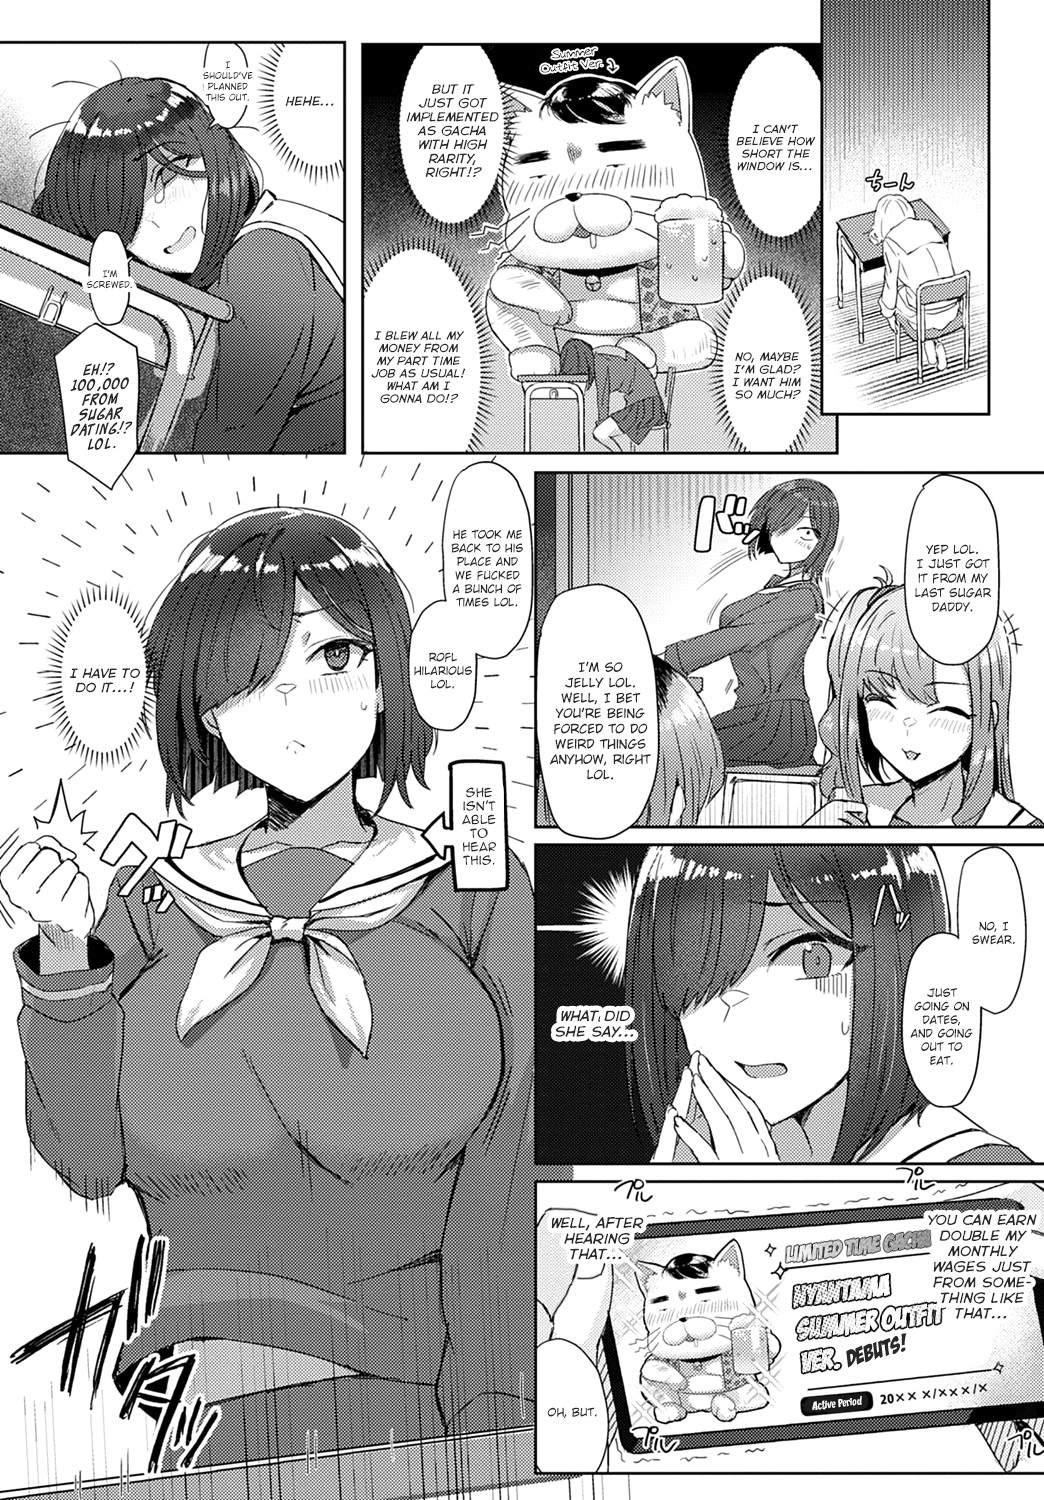 Hentai Manga Comic-Yo, Hitomi-chan Says She's Doing Sugar Dating to Roll Her Favorite Character-Read-2